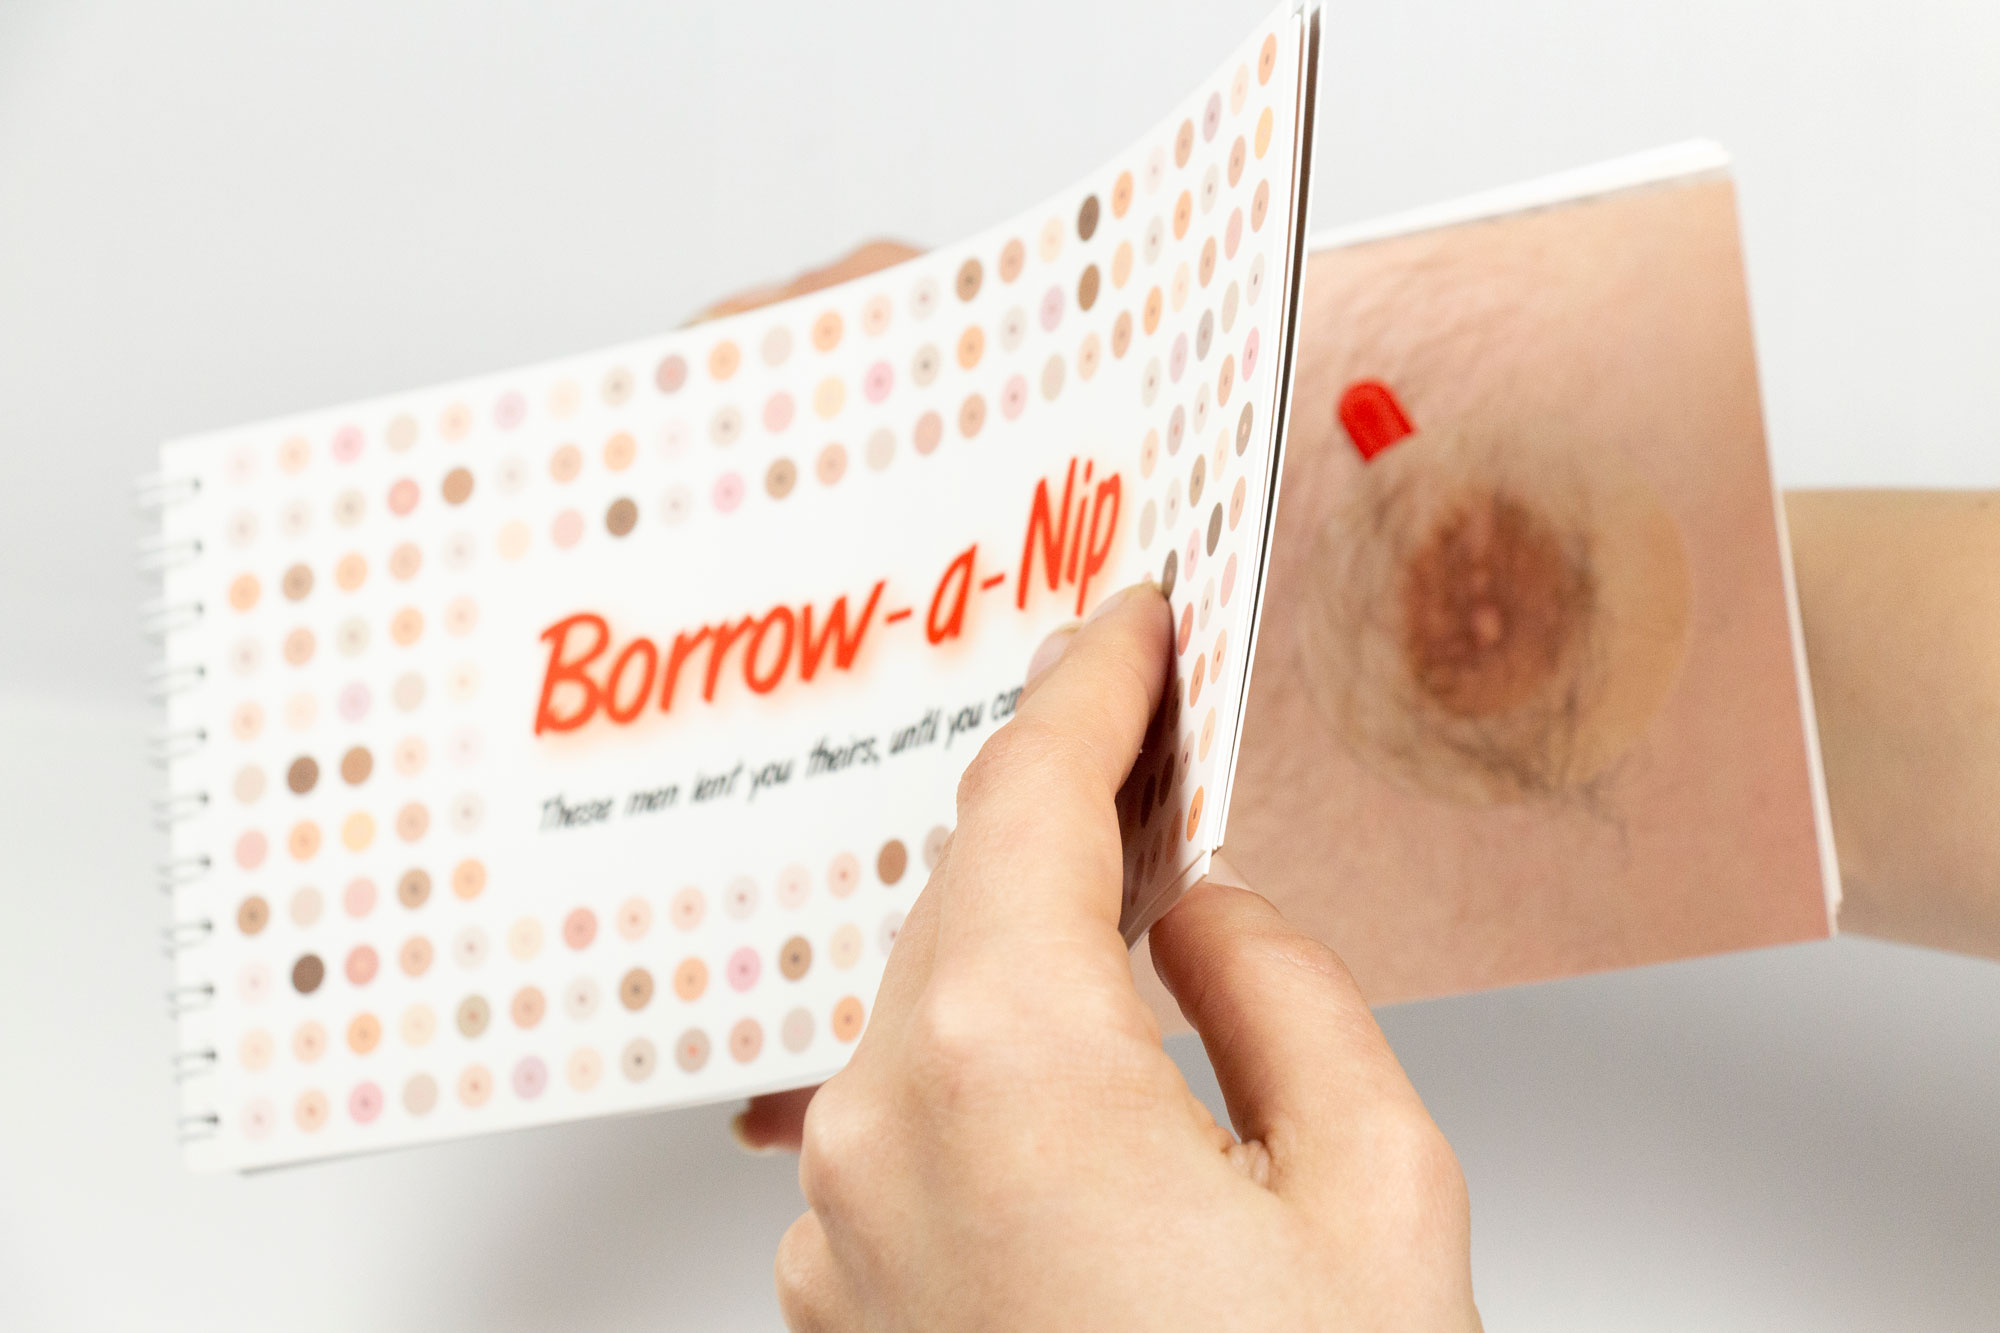 Borrow-a-Nip